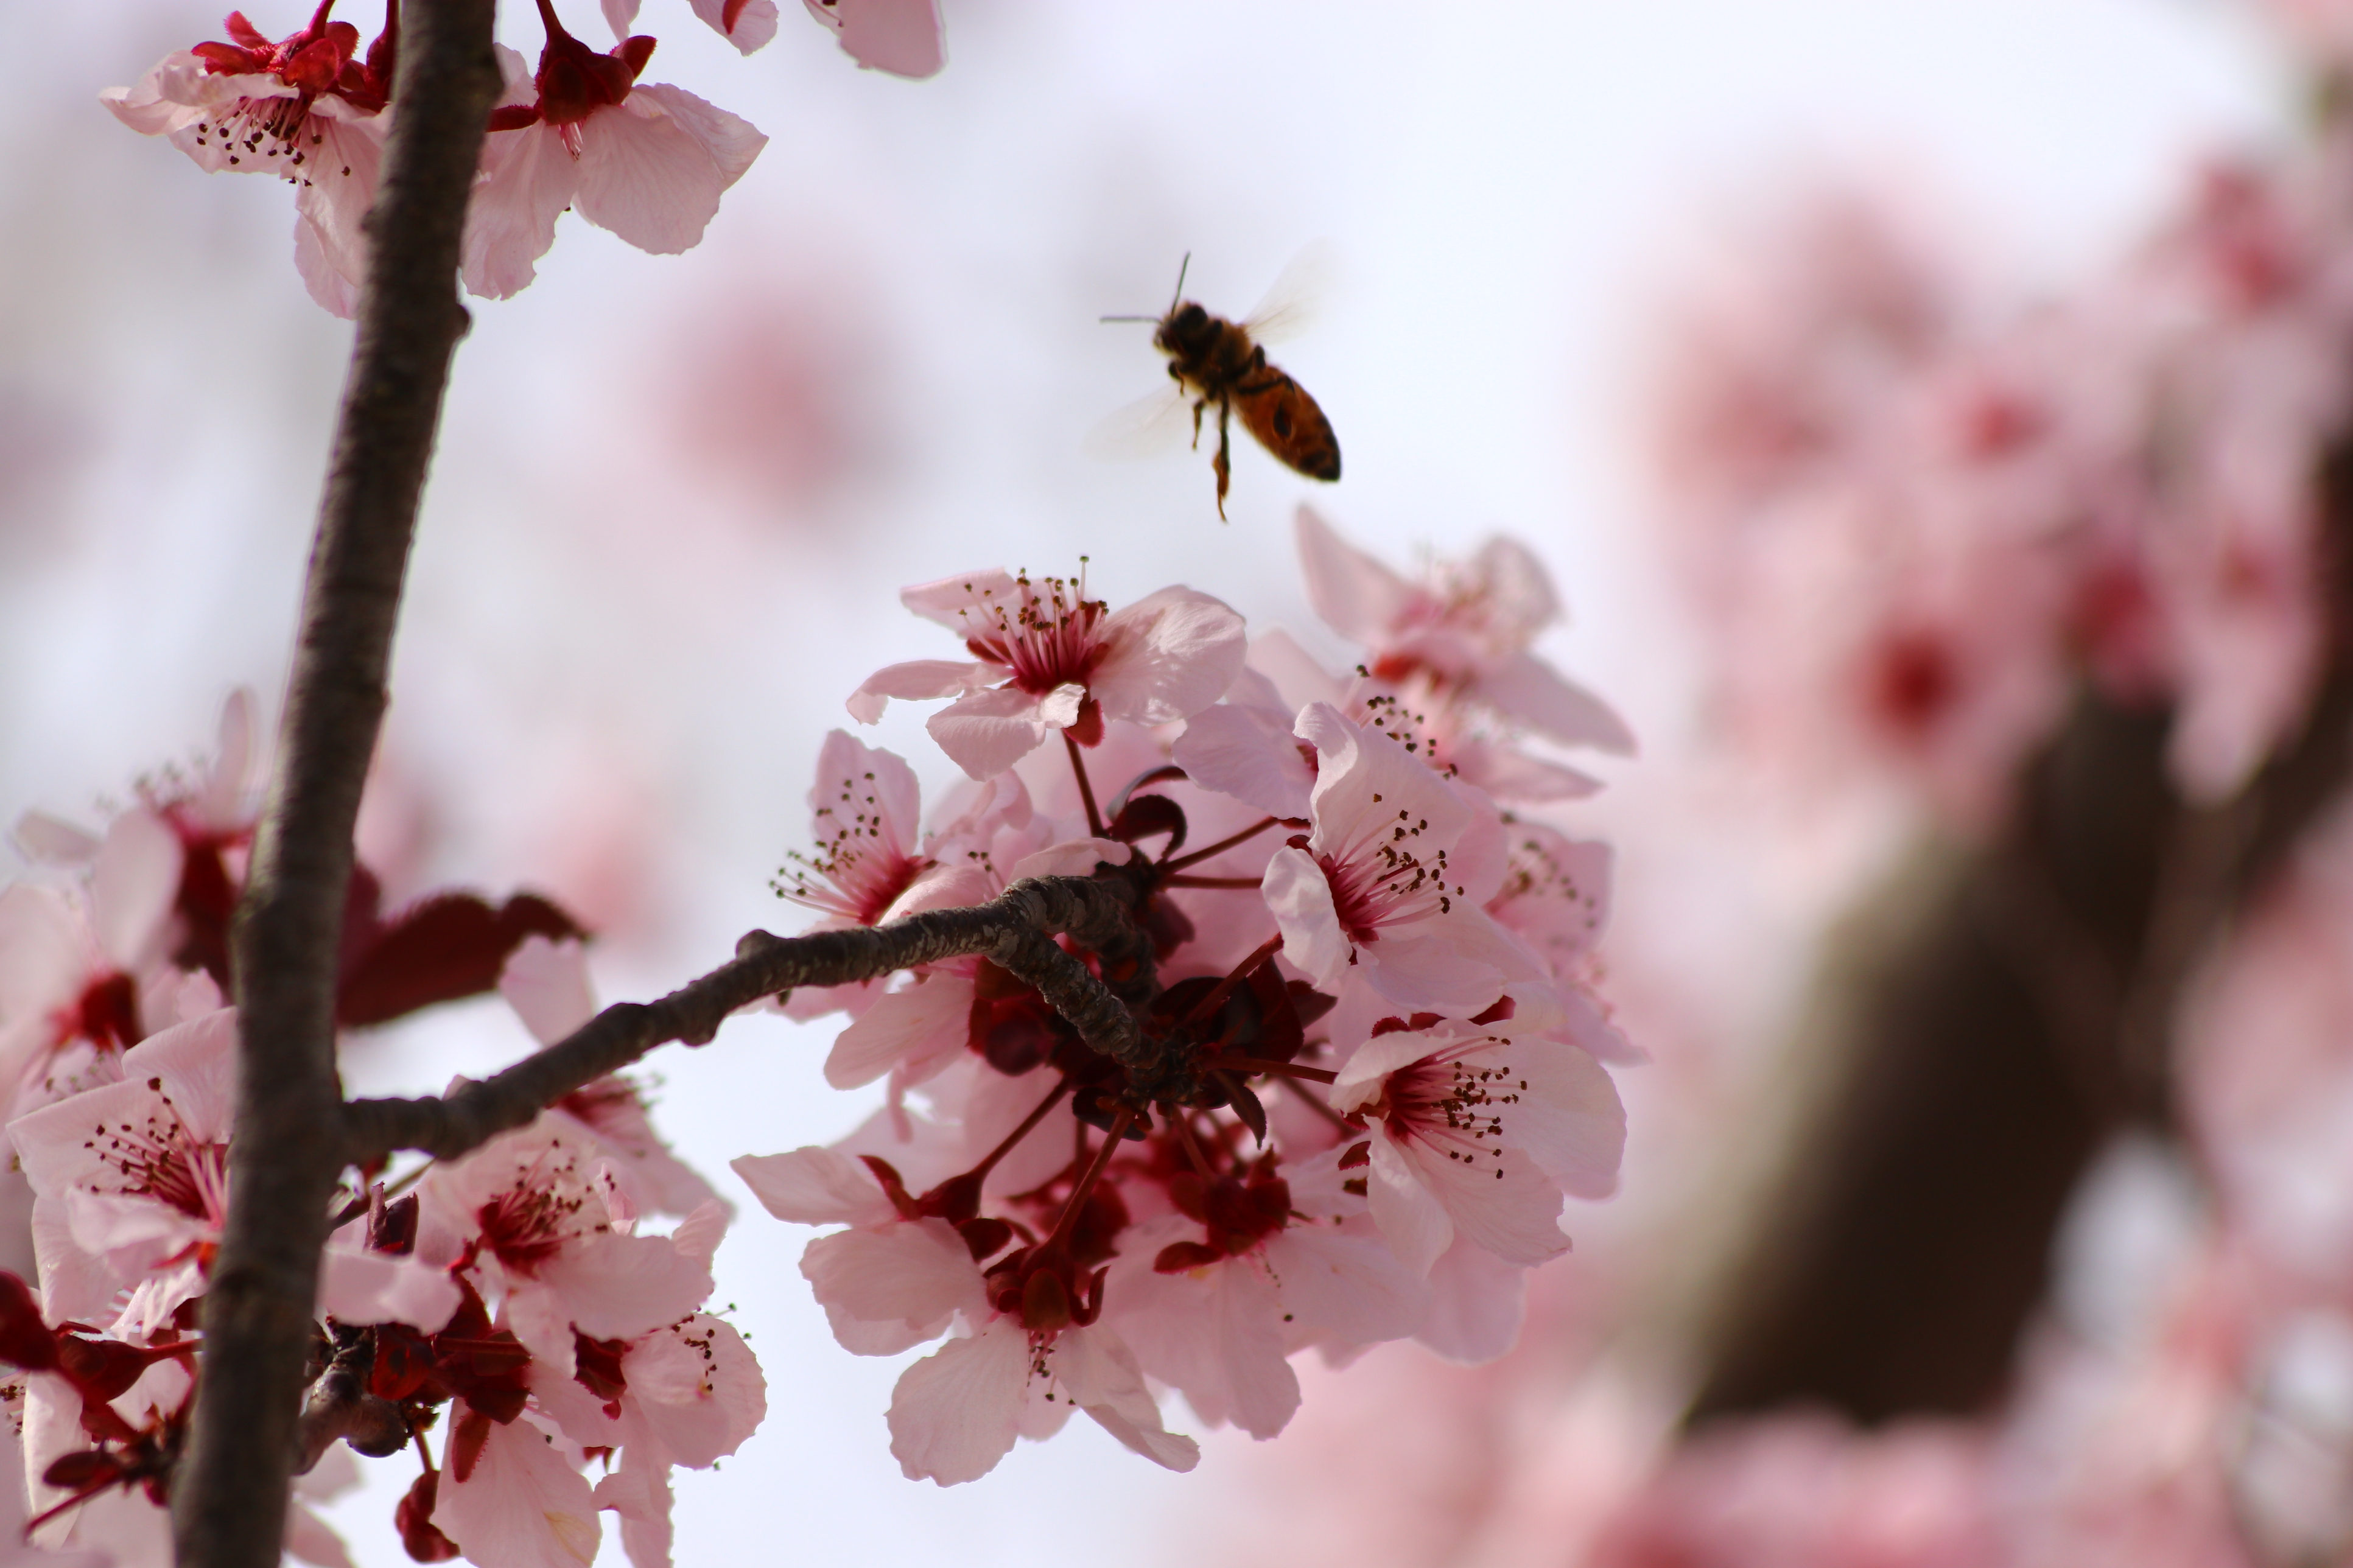 Bees on cherry blossom. (Thinkstock/PA)